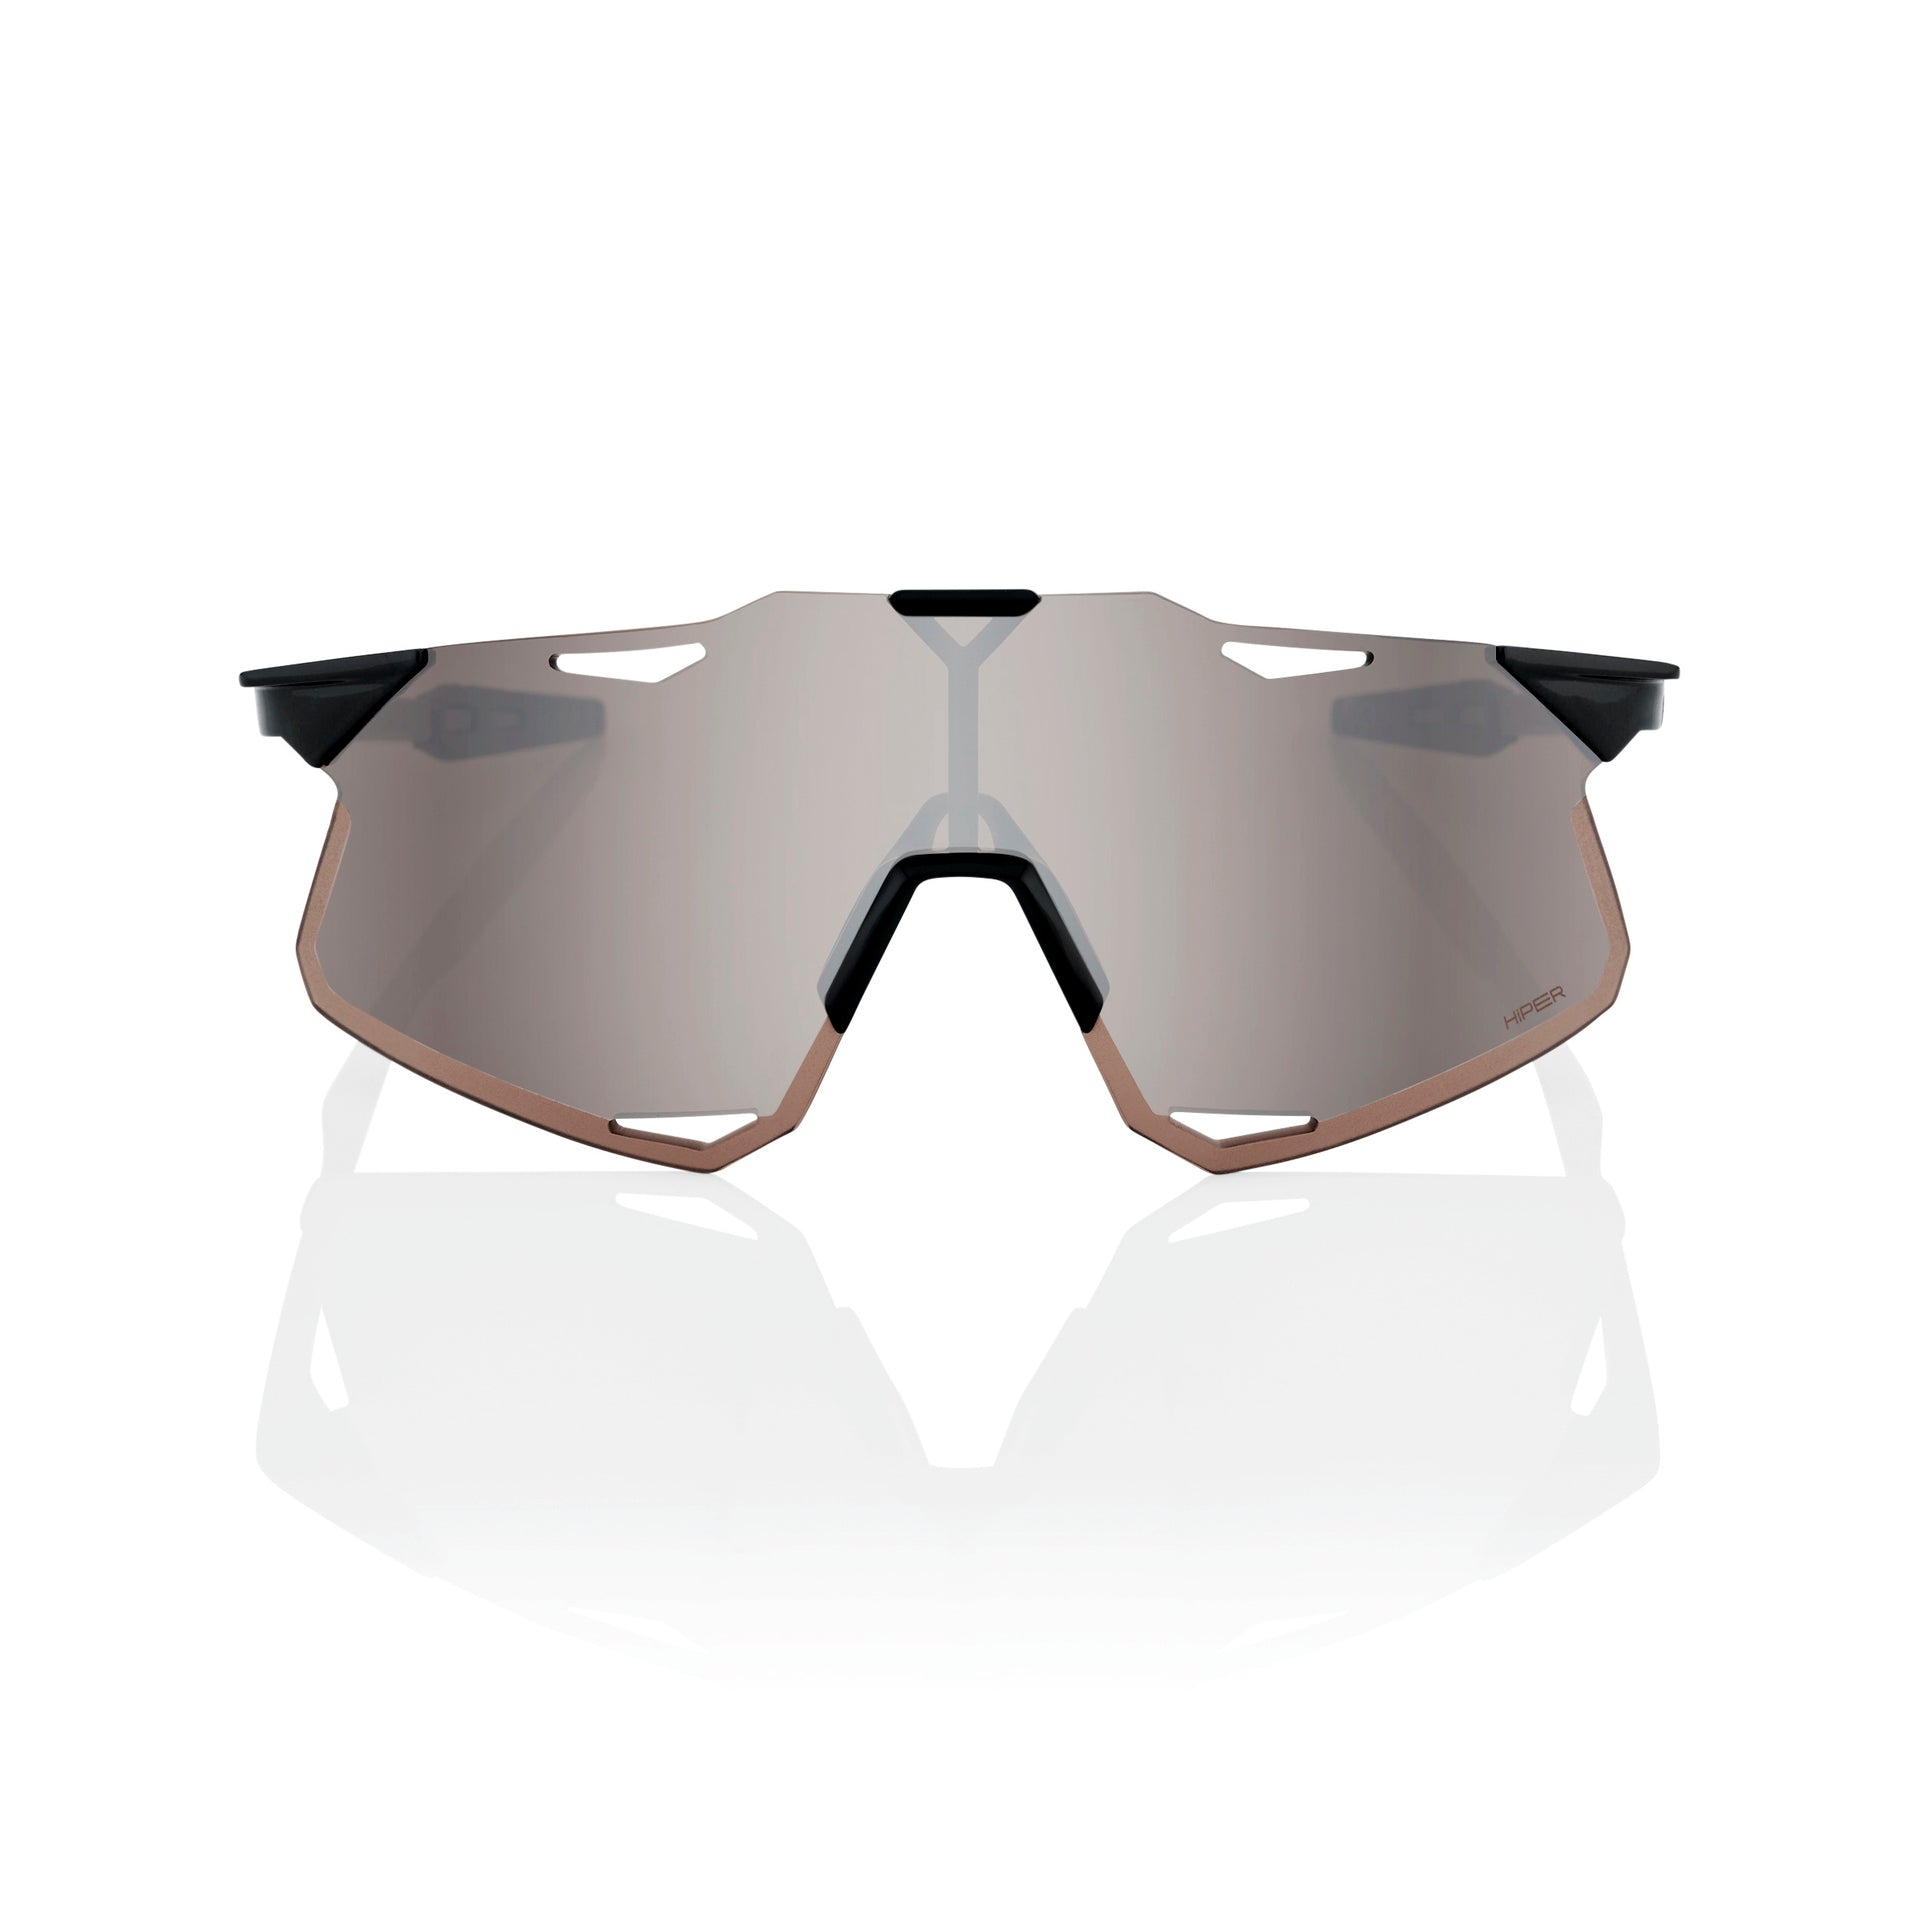 100 Percent Hypercraft Sunglasses - One Size Fits Most - Gloss Black - HiPER Silver Mirror Lens - Image 2